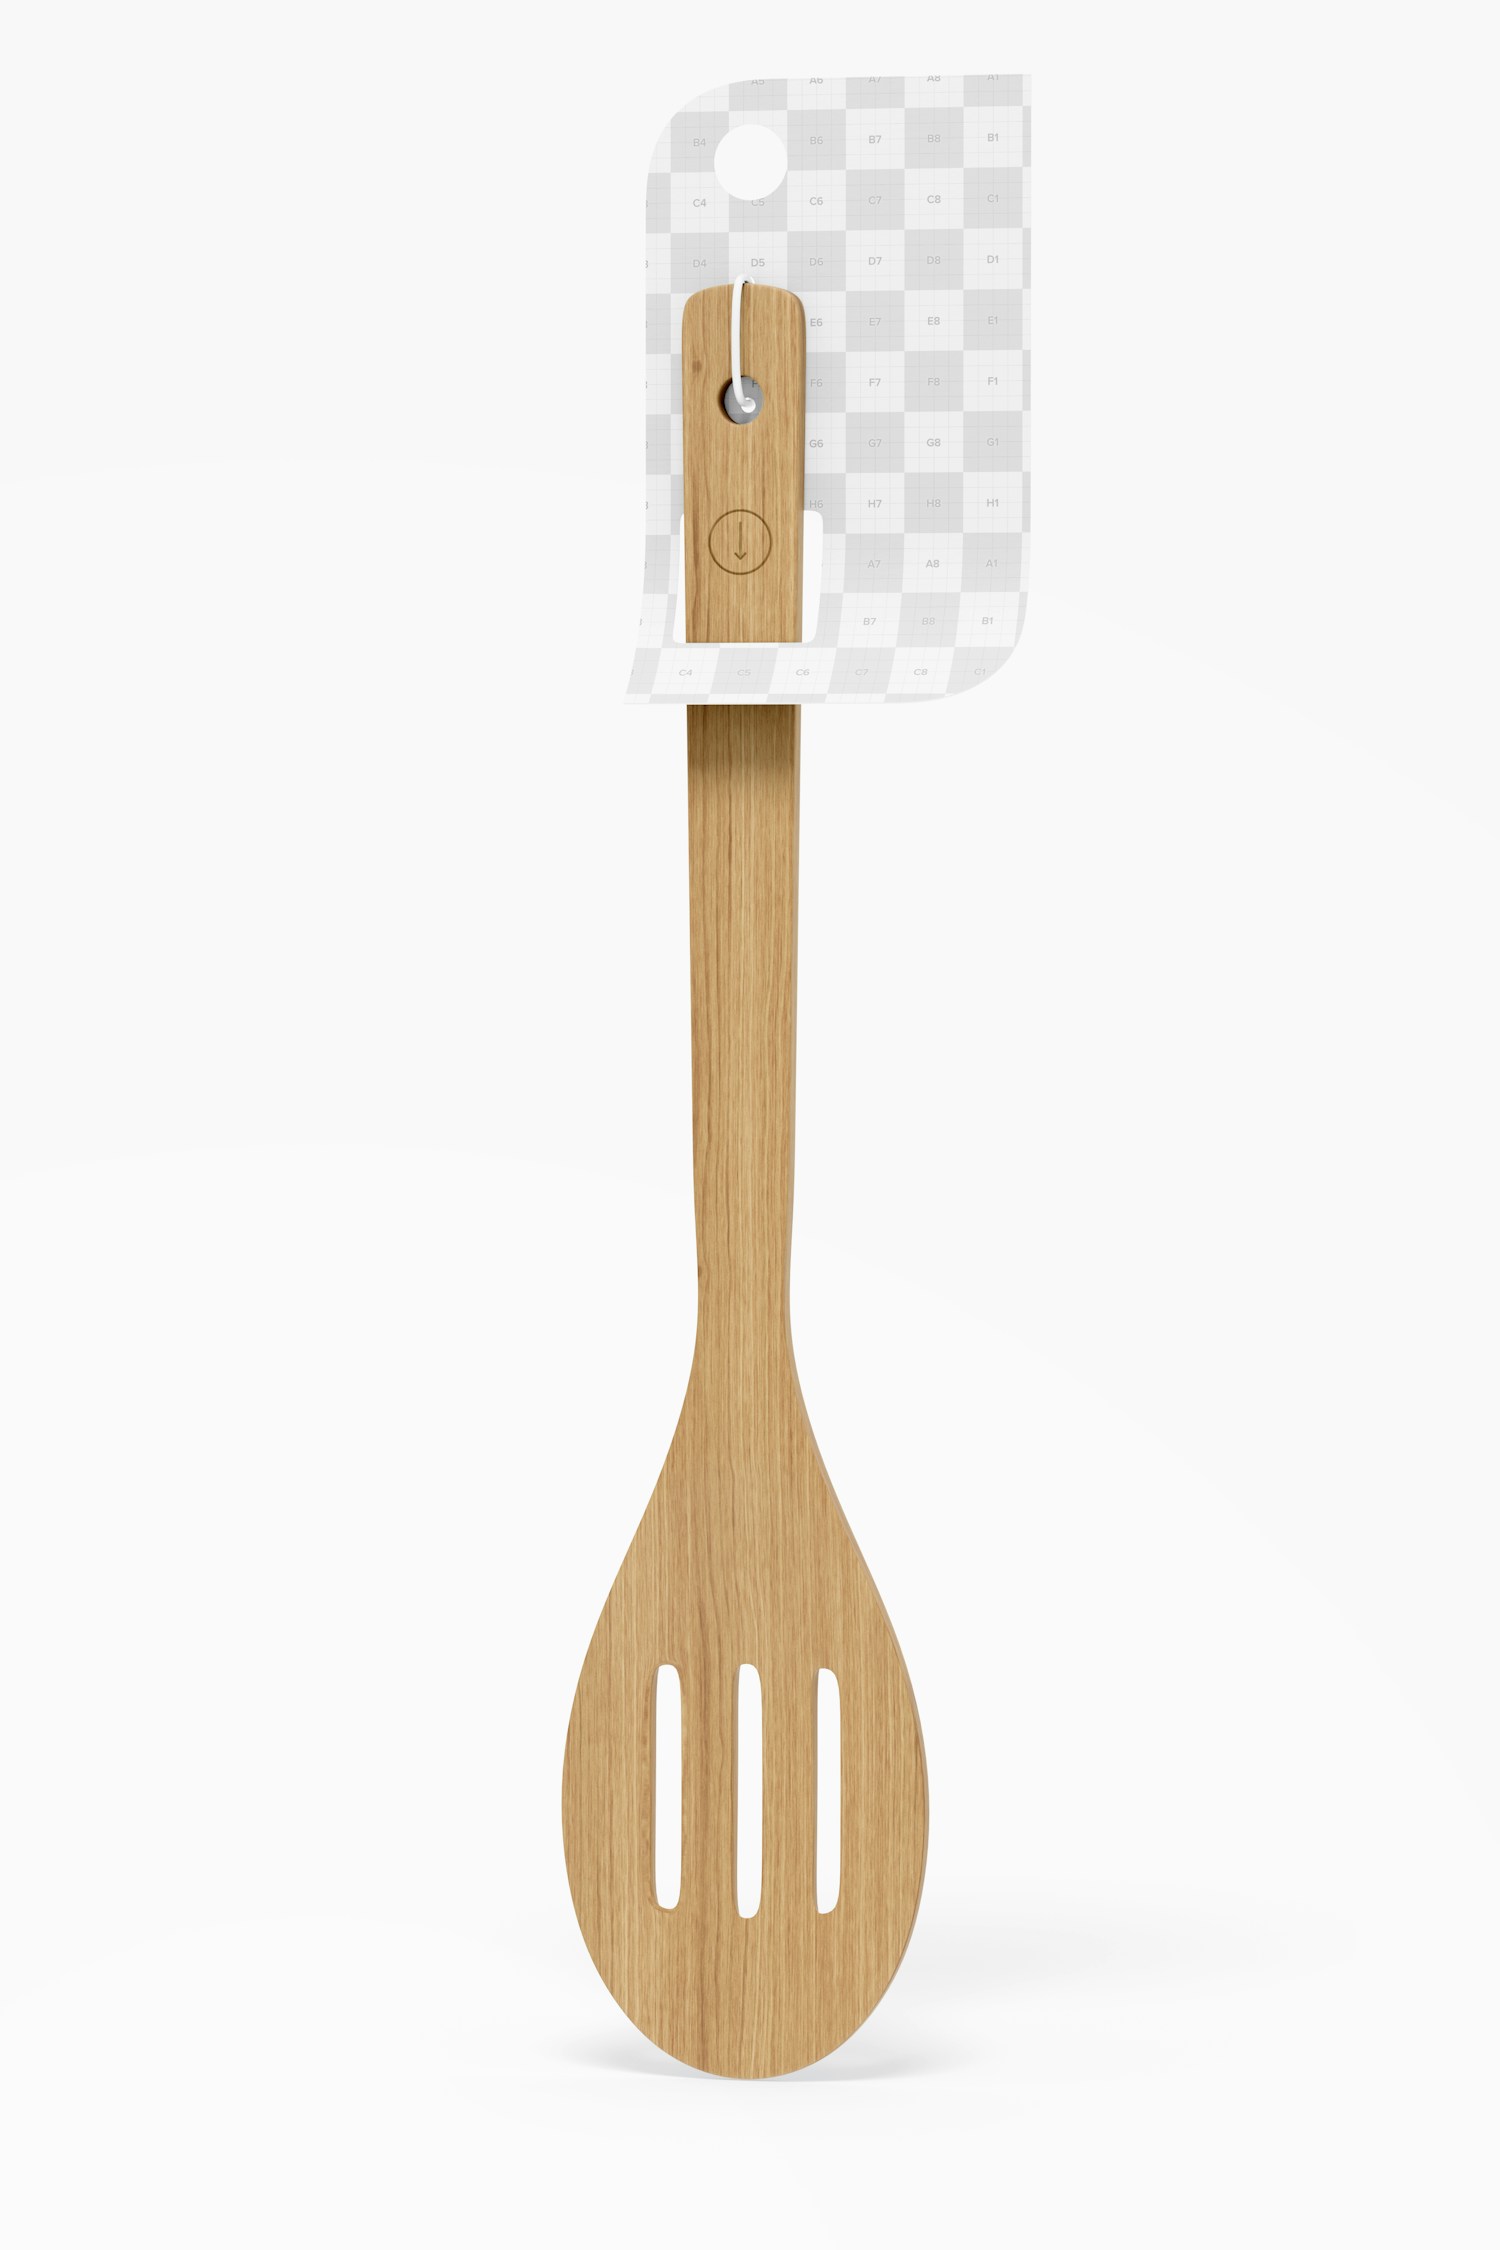 Bamboo Slotted Spoon Mockup